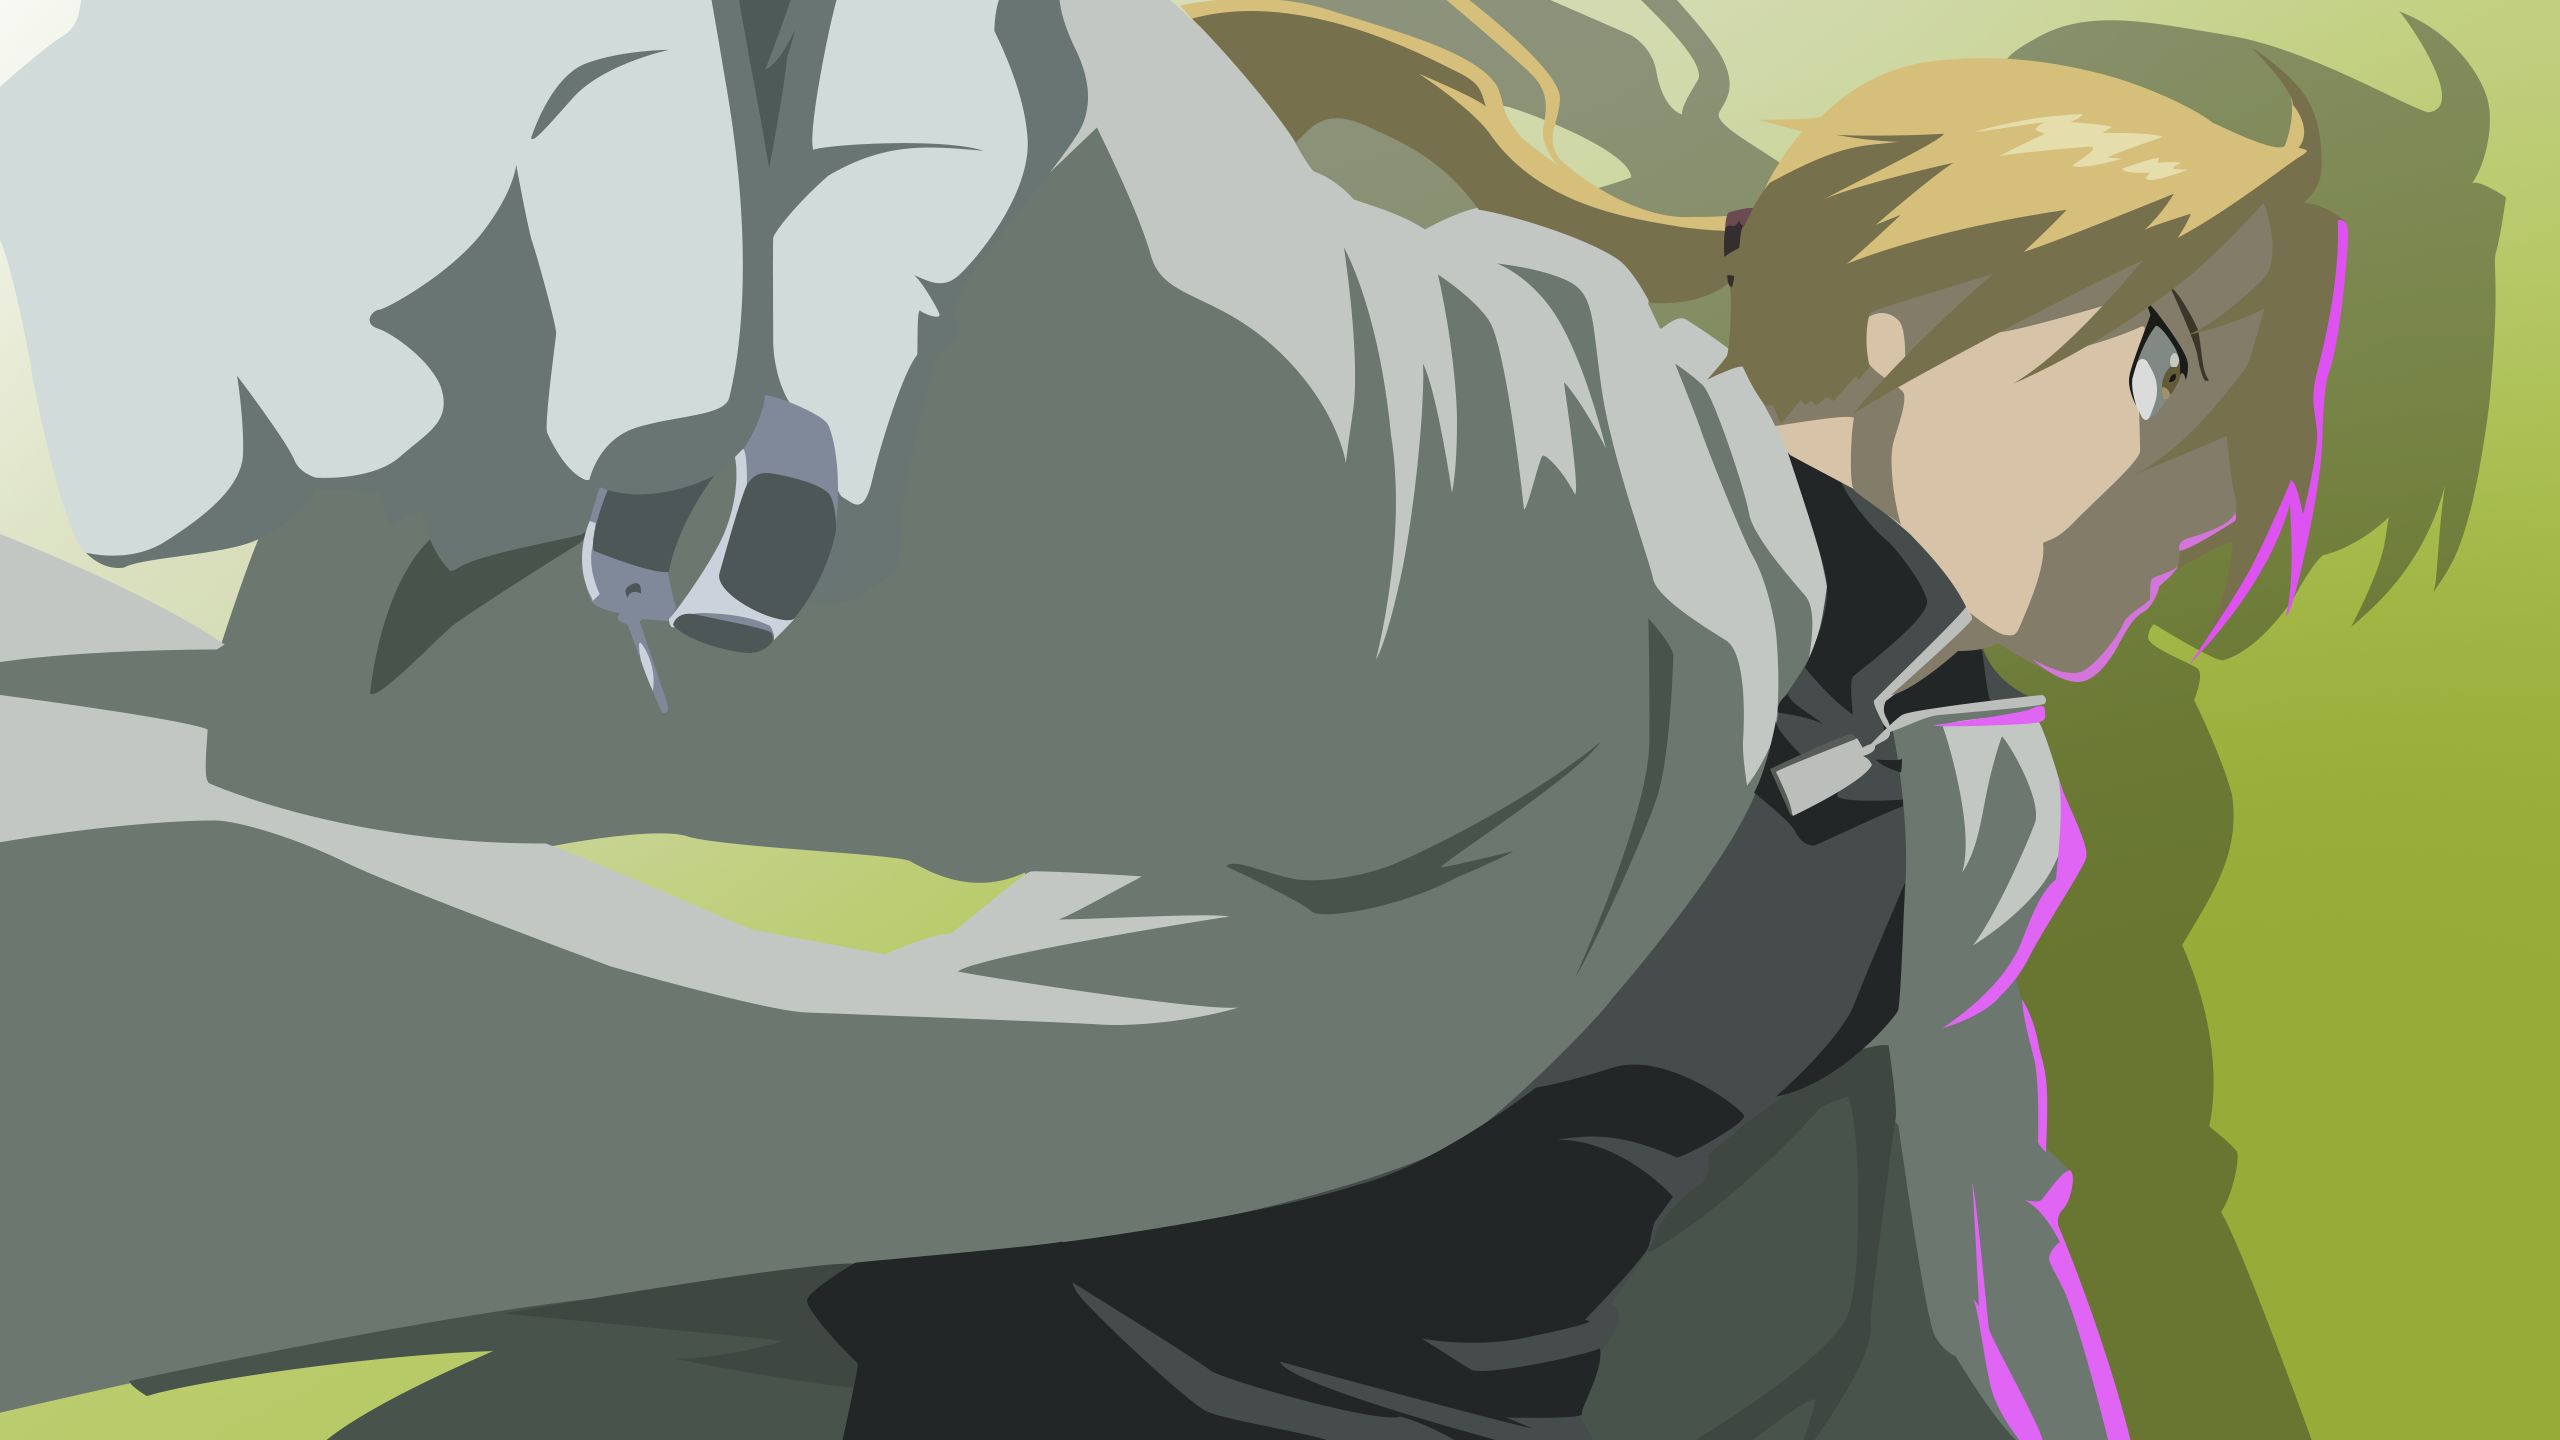 Download Image Main Characters of Fullmetal Alchemist Brotherhood